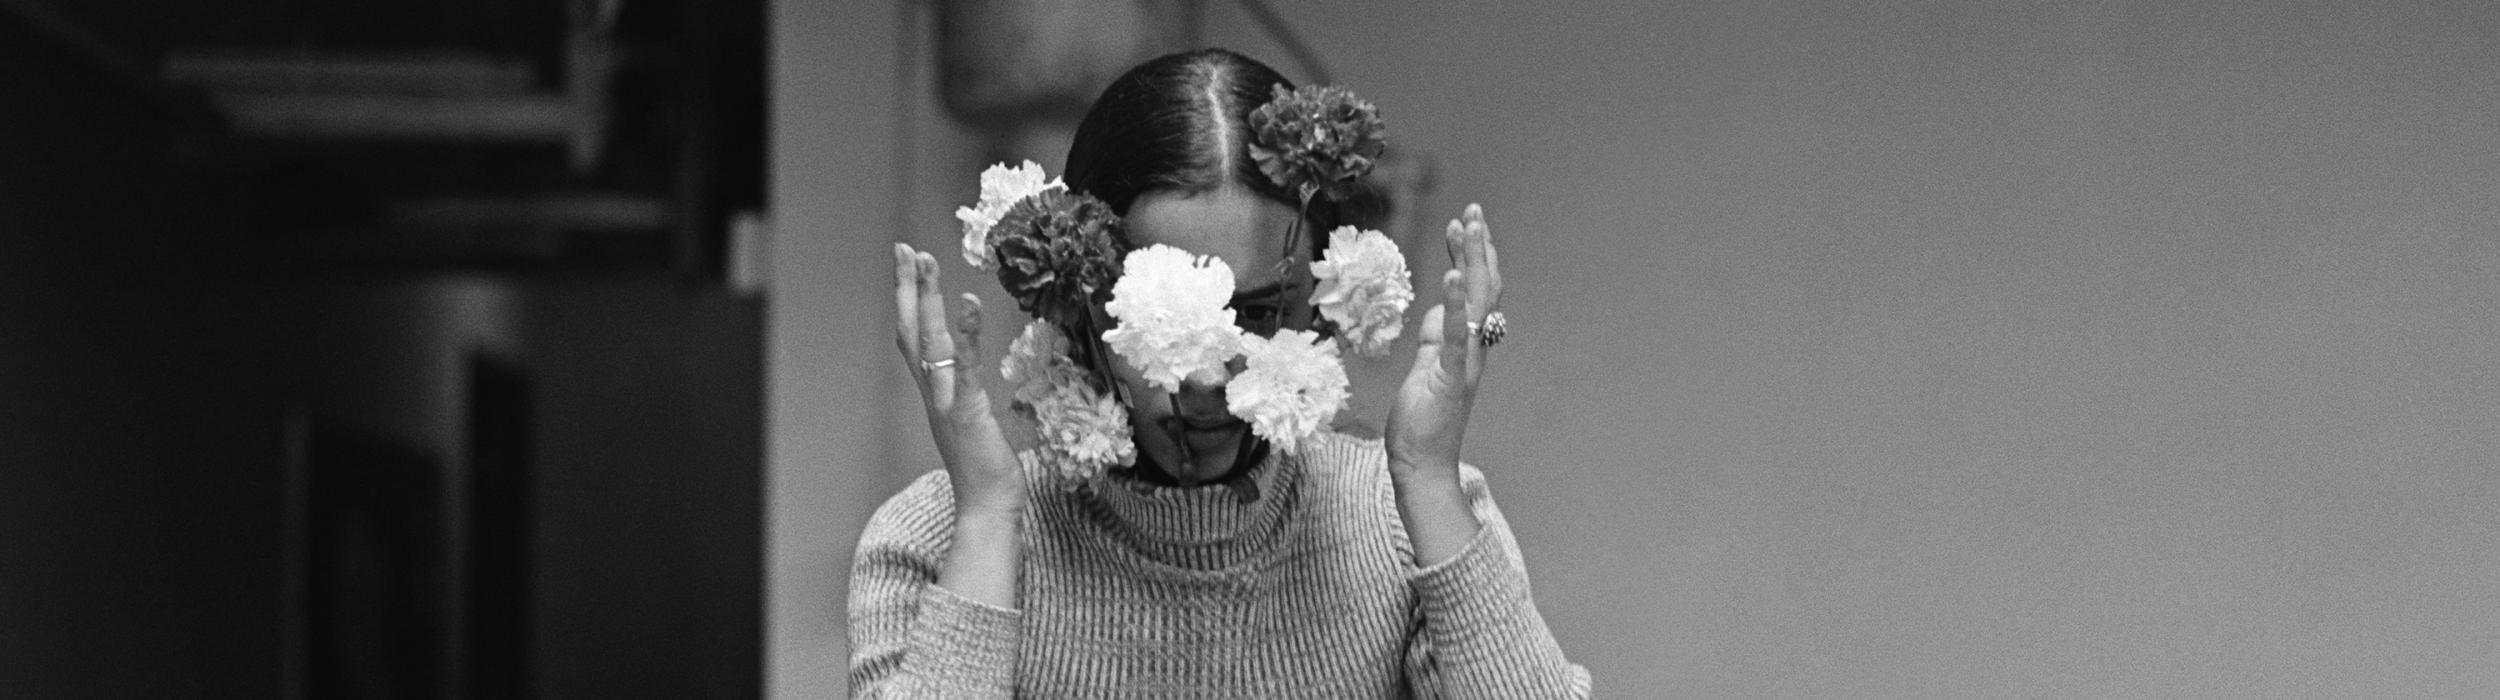 Ana Mendieta, Untitled (détail), 1973 © 2023 The Estate of Ana Mendieta Collection, LLC / Adagp, Paris. Courtesy Estate collection Ana Mendieta, LLC et Galerie Lelong & Co